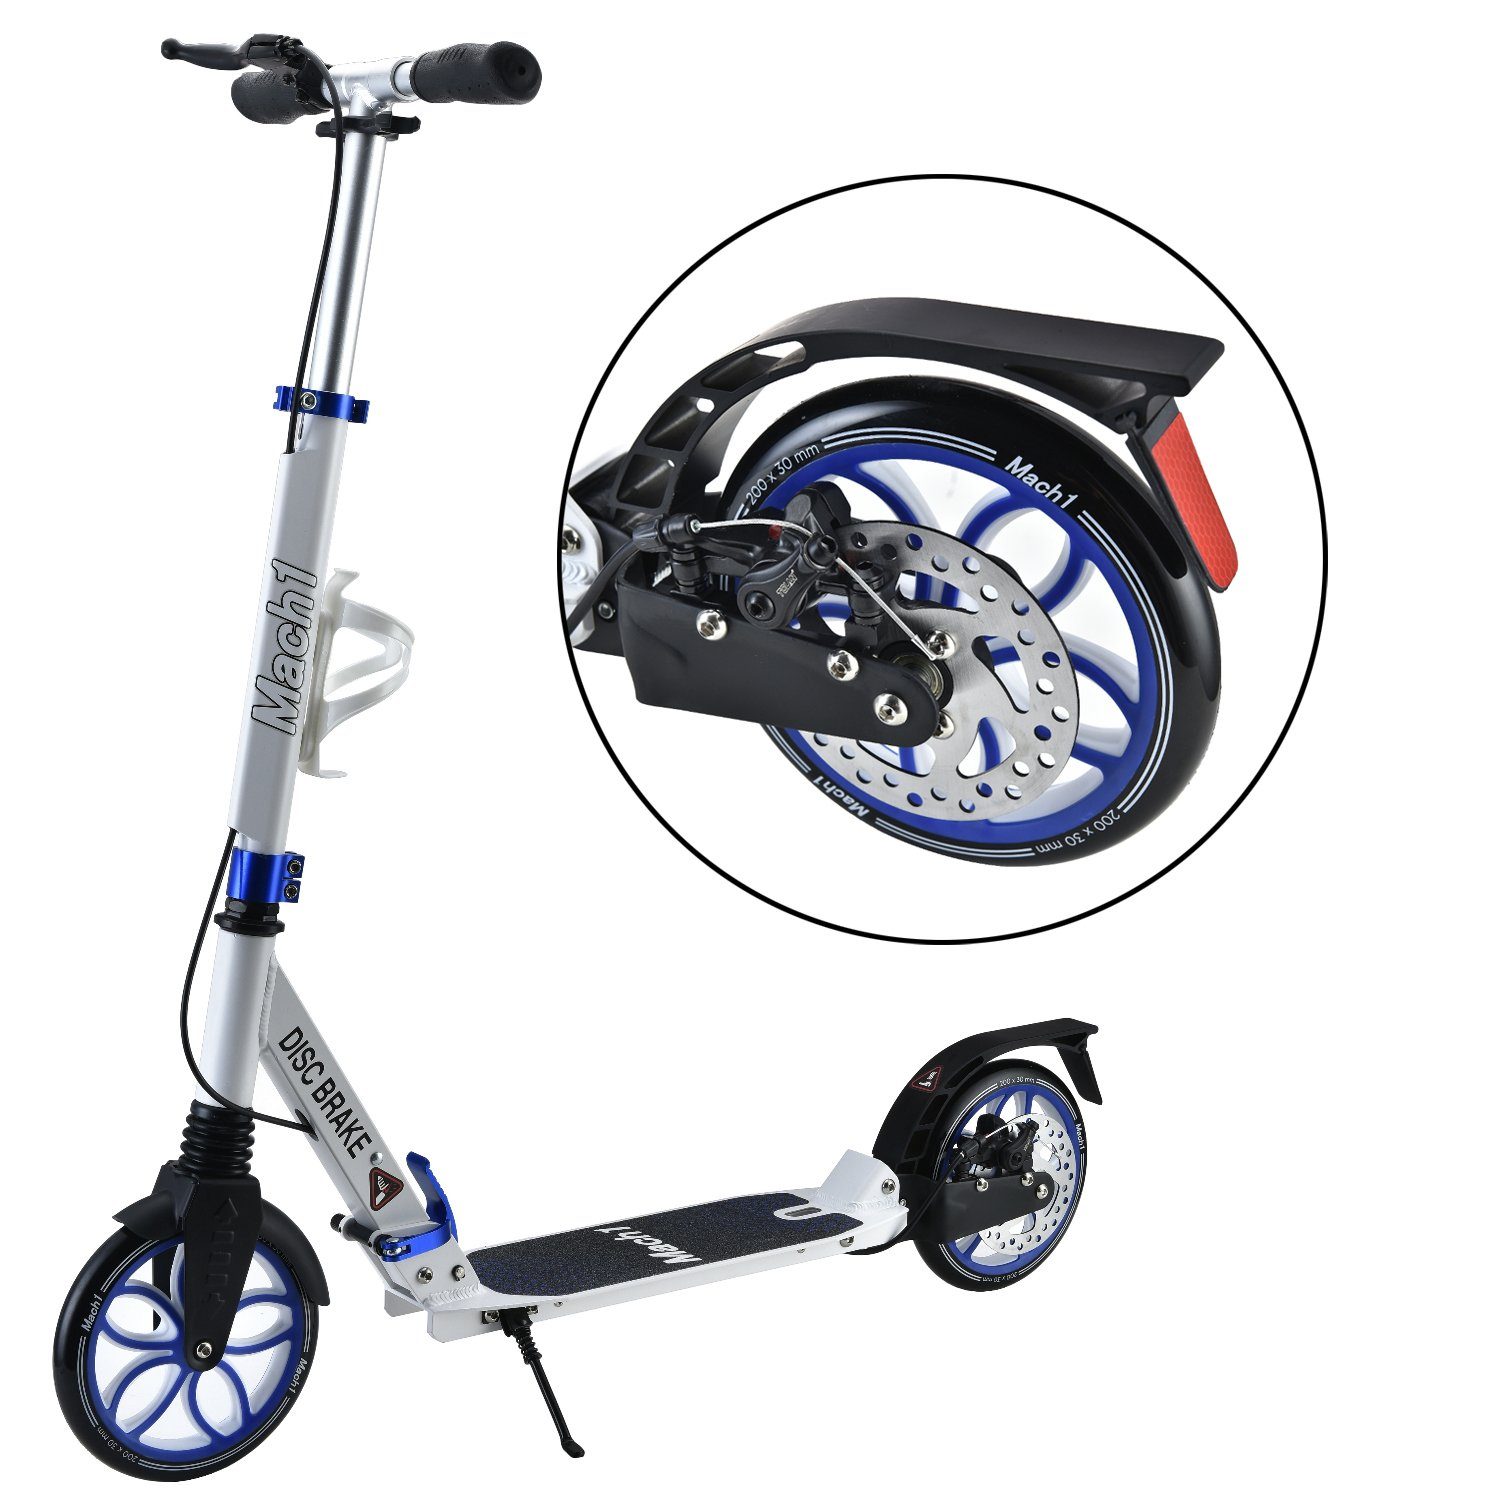 Klappbar Tretroller Cityroller Kinderroller Erwachsene Scooter Roller Big Wheel 